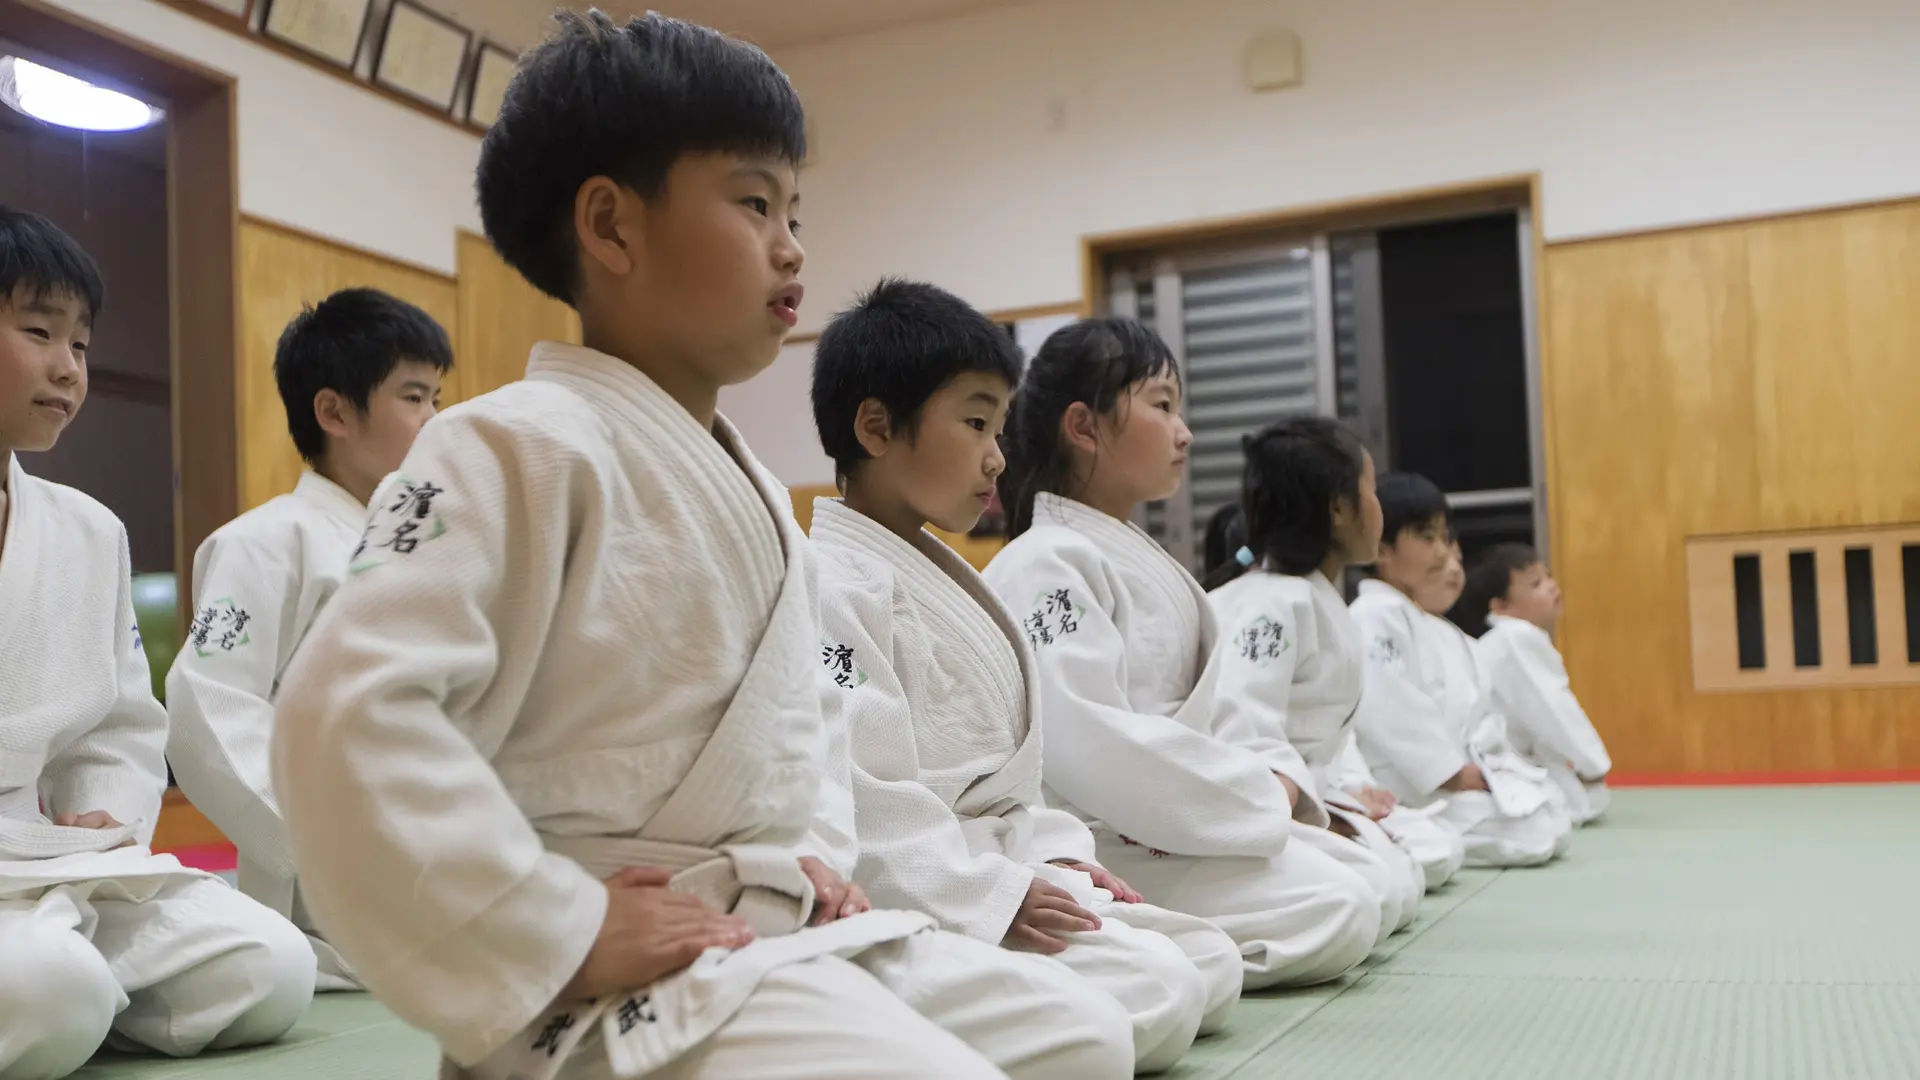 Nine kids doing martial arts with white kimono's in Tokyo. 